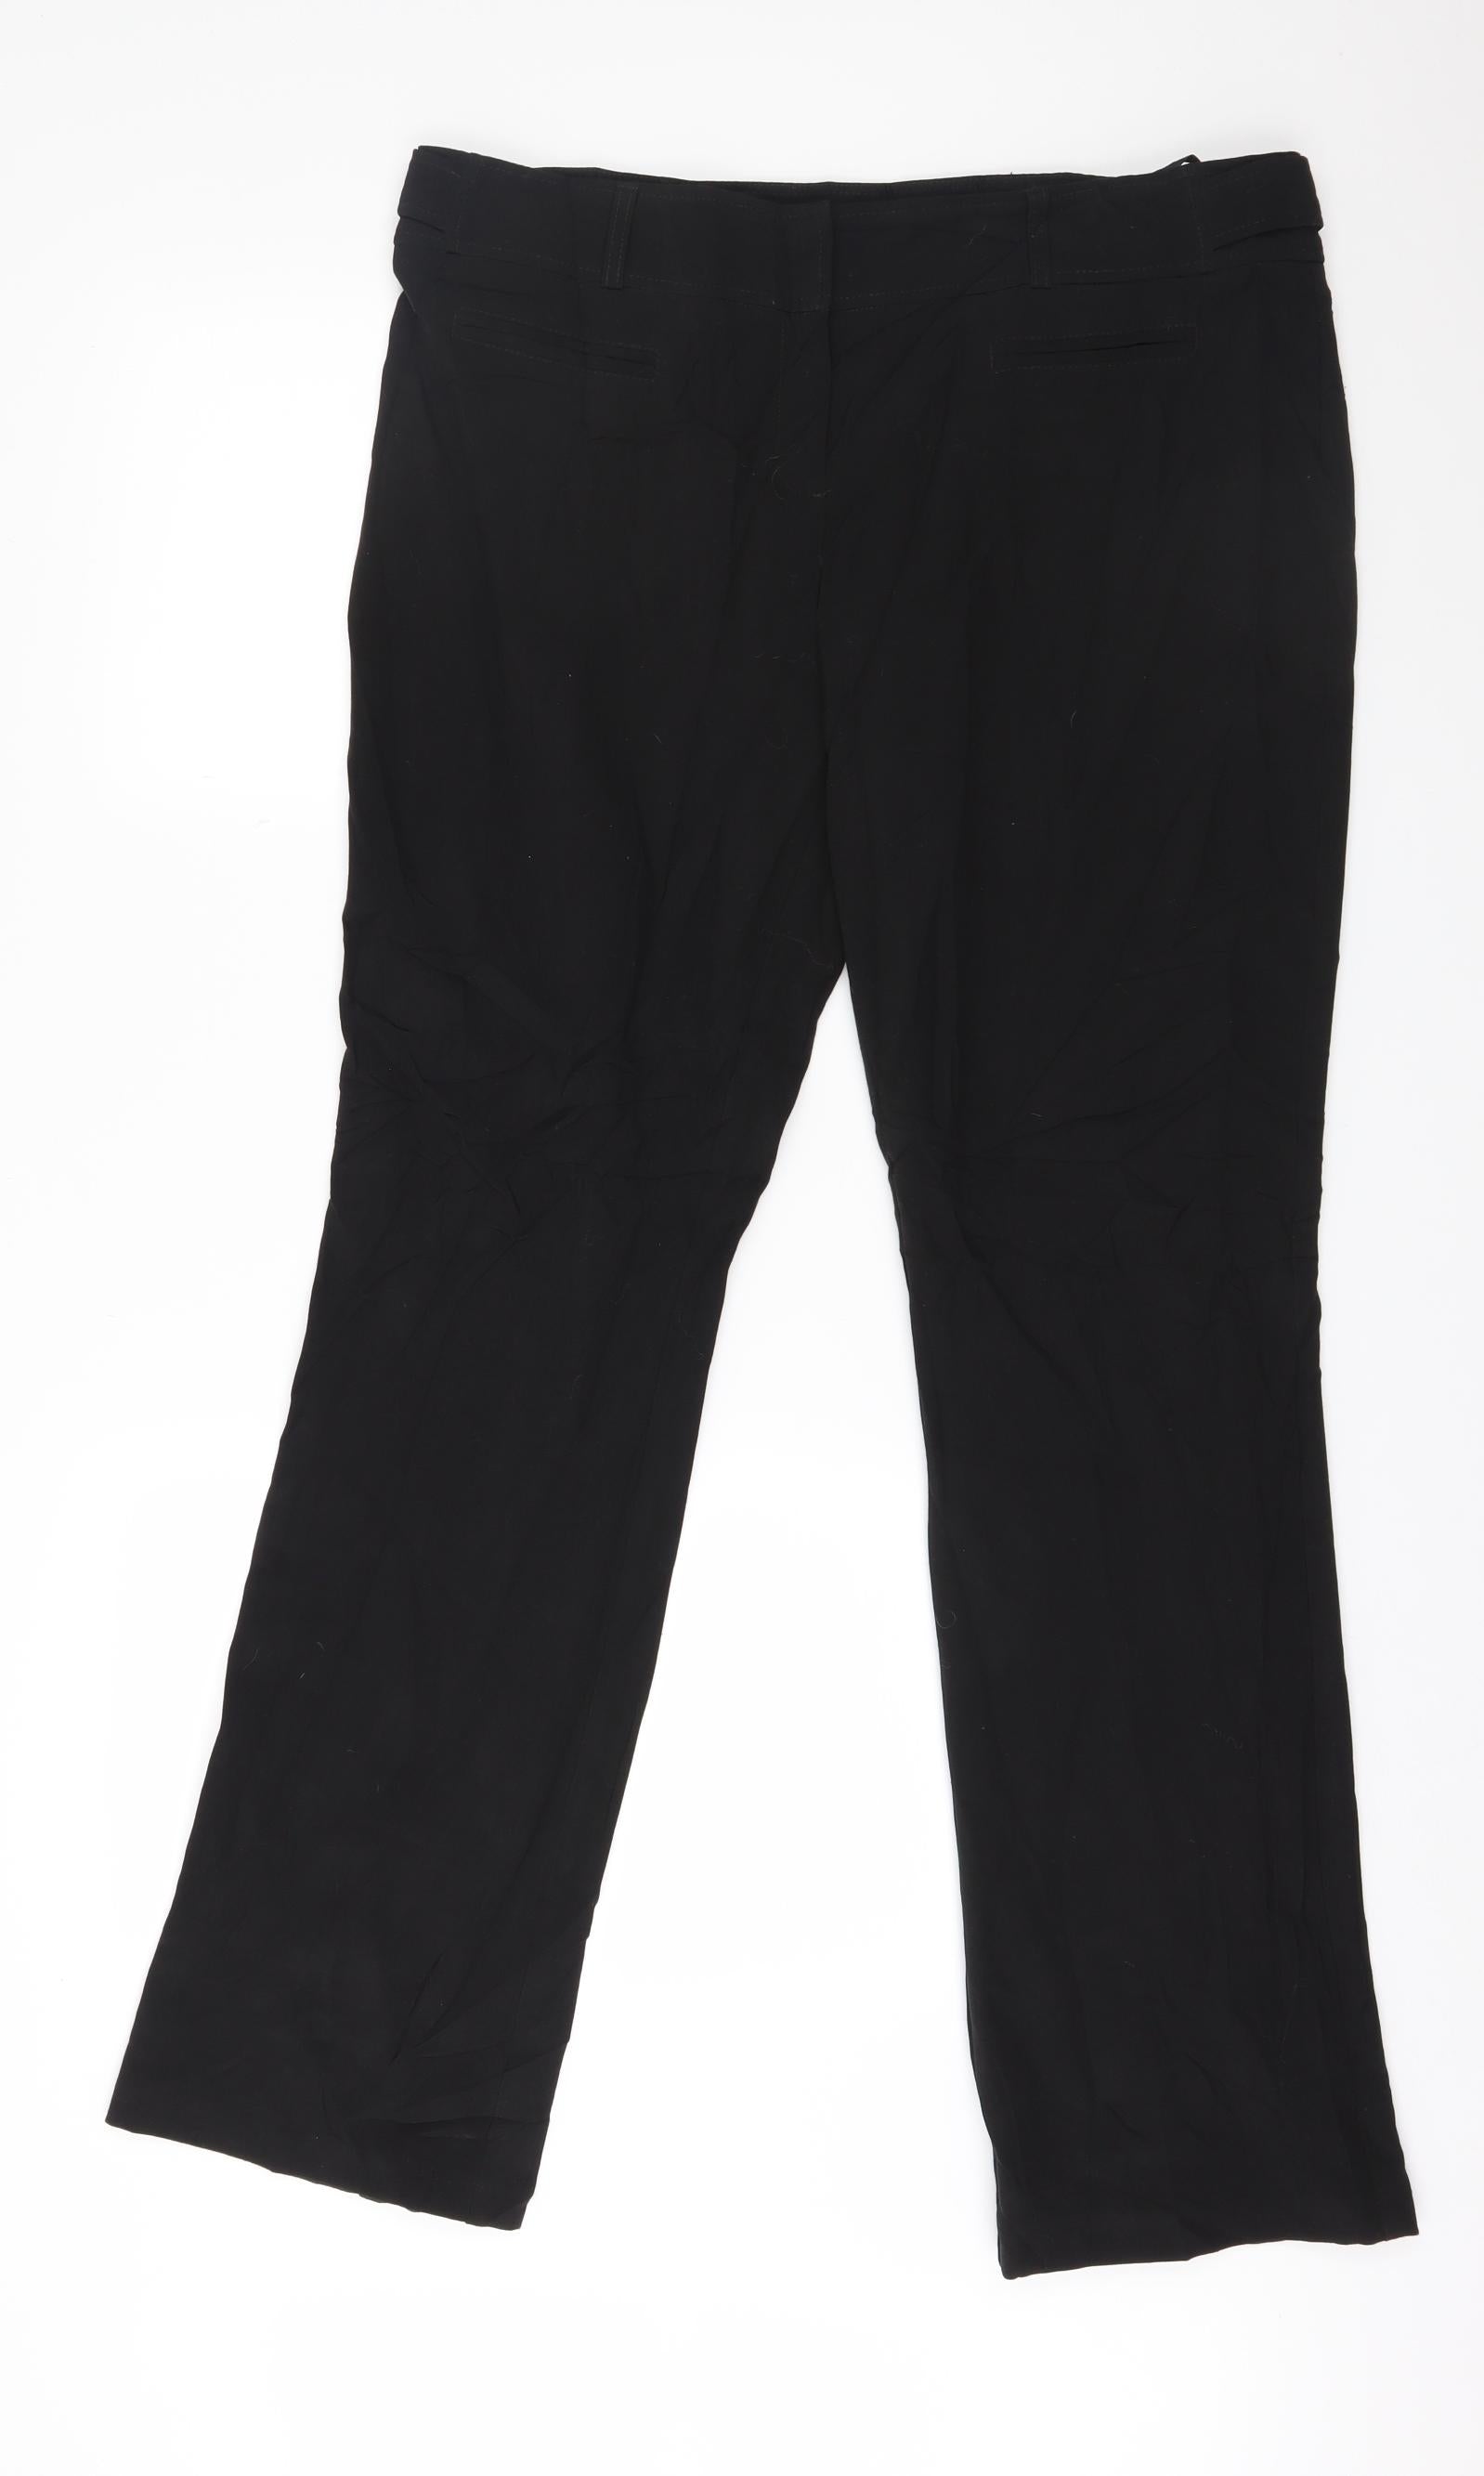 Branded  Charcoal Razor Edge Slim Suit Trousers  Suit Direct